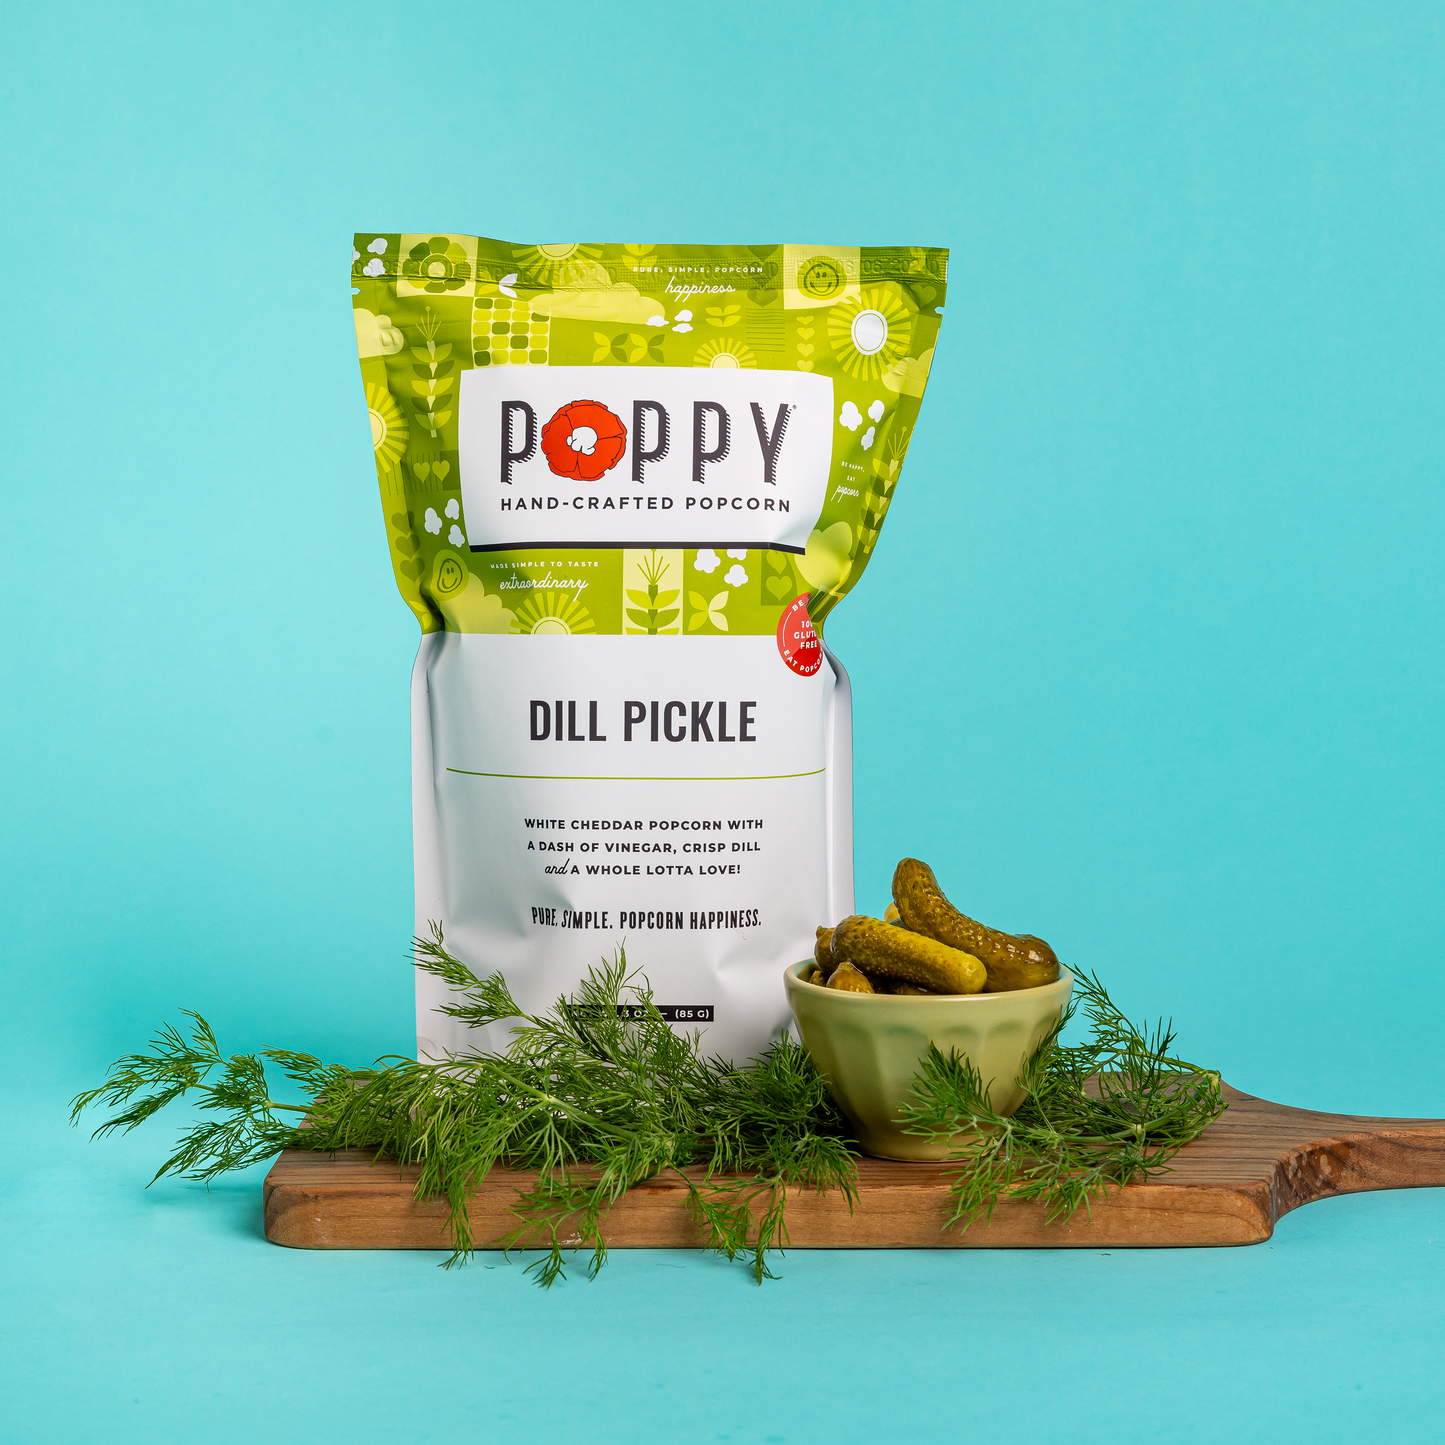 Dill Pickle Market Bag Case